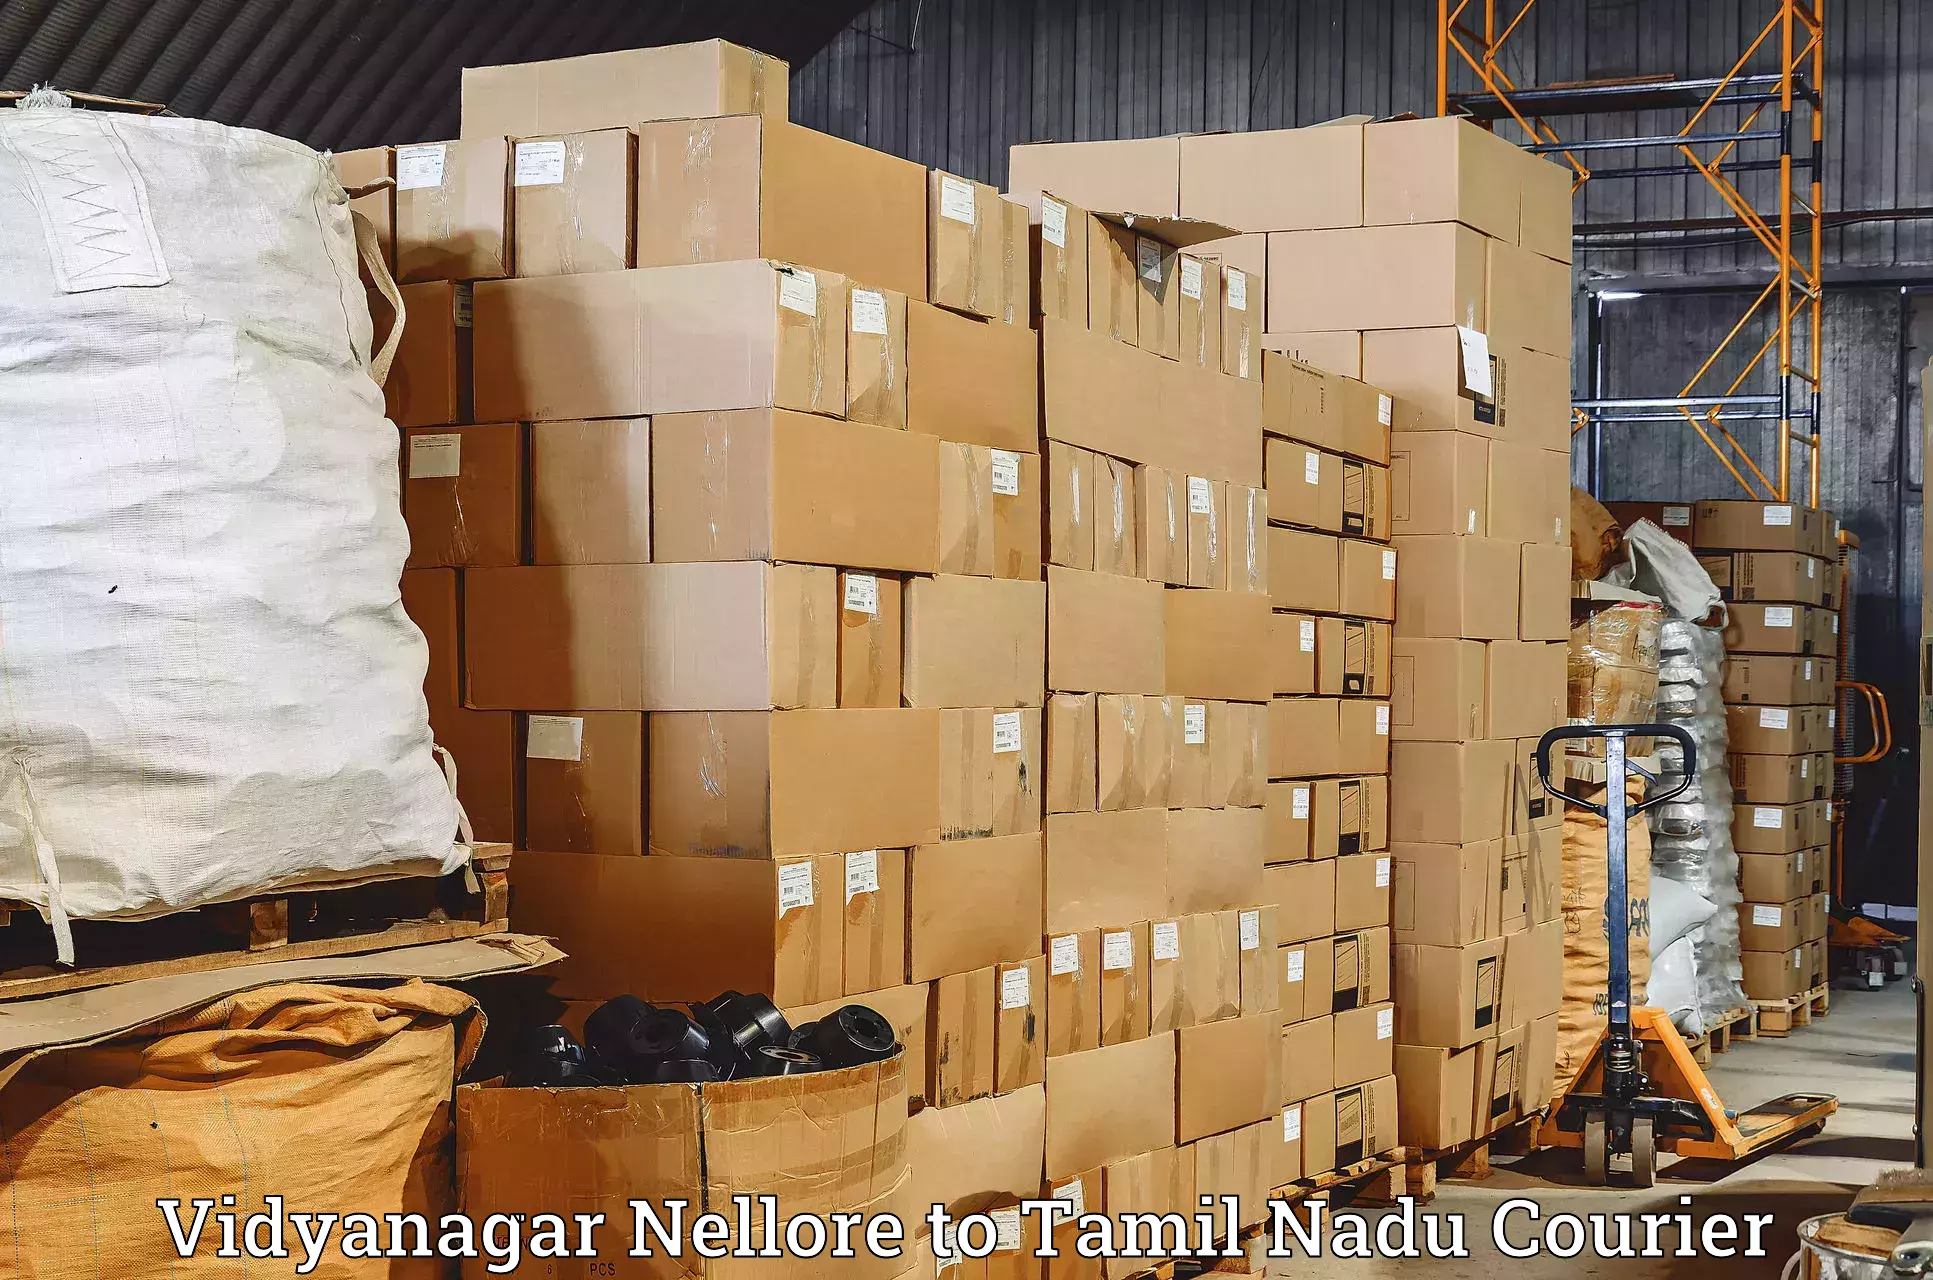 24/7 courier service Vidyanagar Nellore to Cuddalore